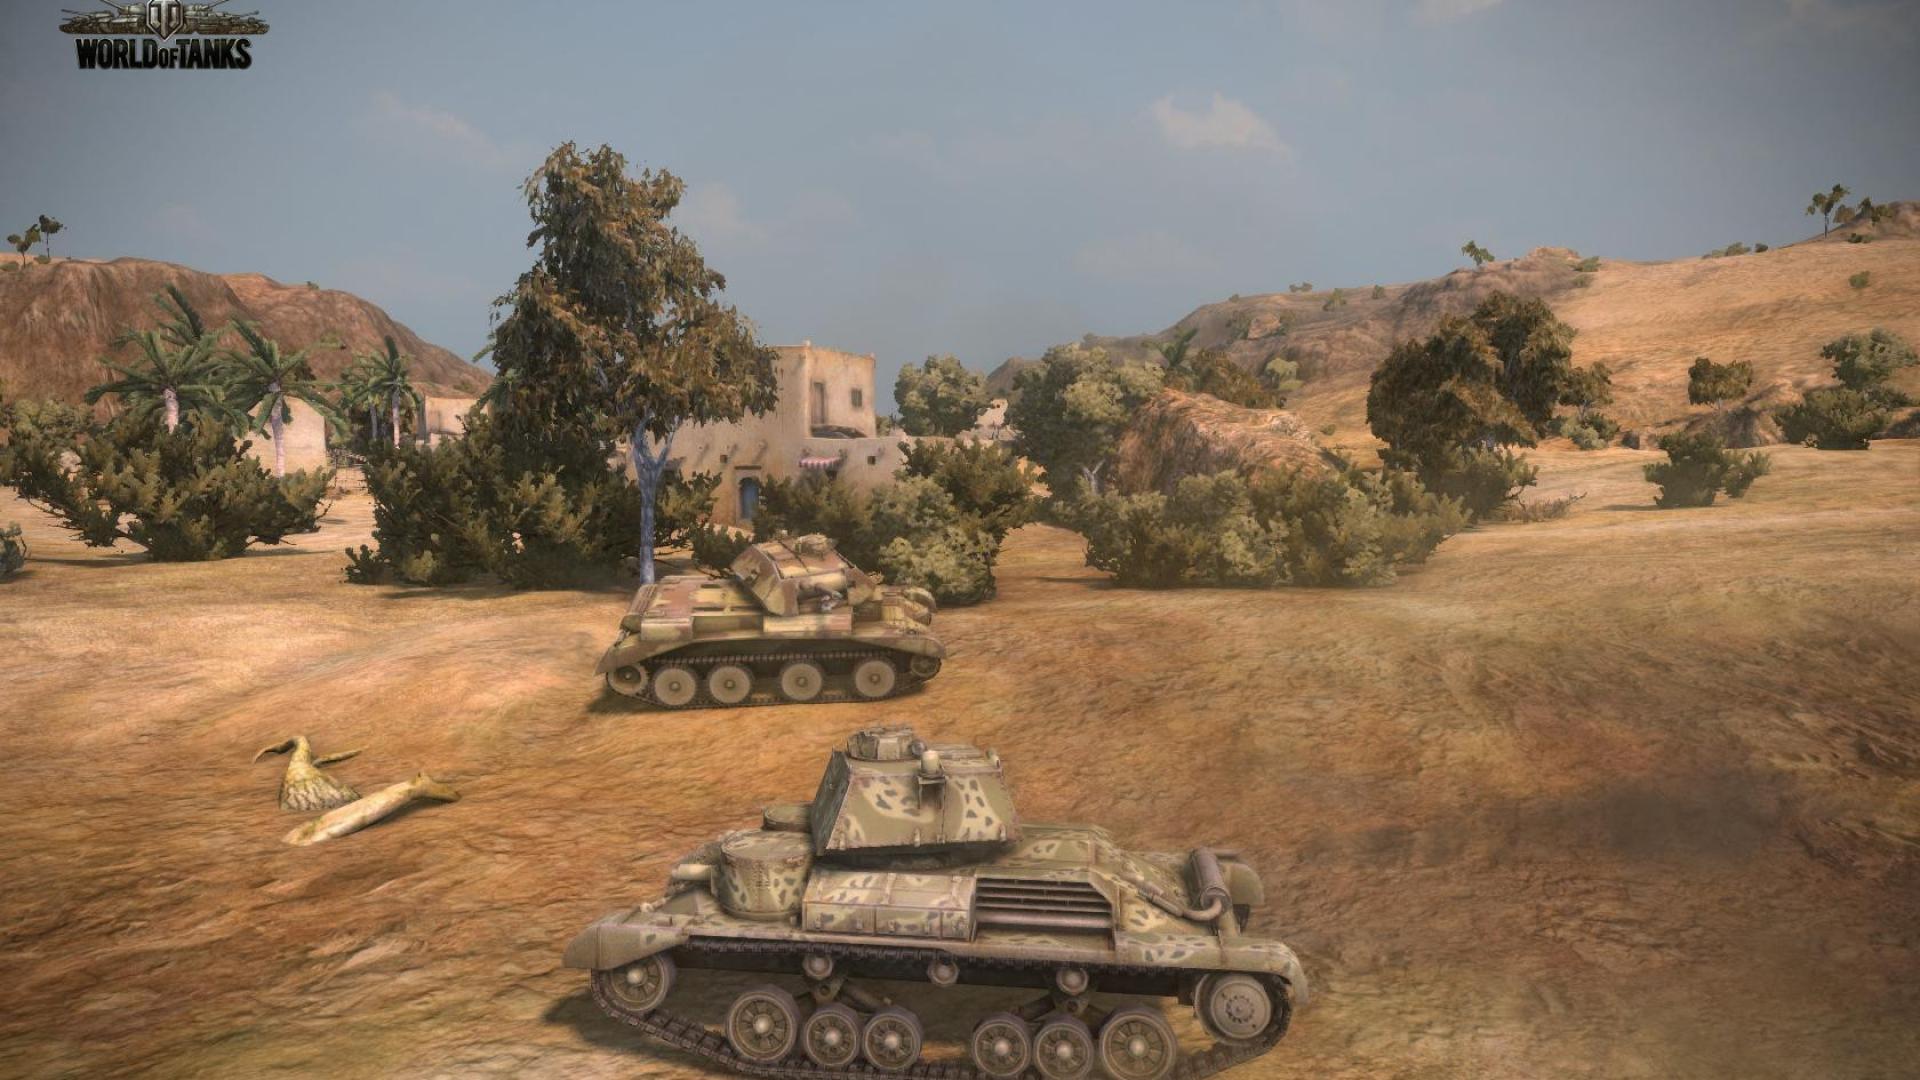 Моды для wot 1.25. Танк игра World of Tanks. Cruiser MK 1 WOT Blitz. 1 Версия ворлд оф танк. World of Tanks 0.8.0.